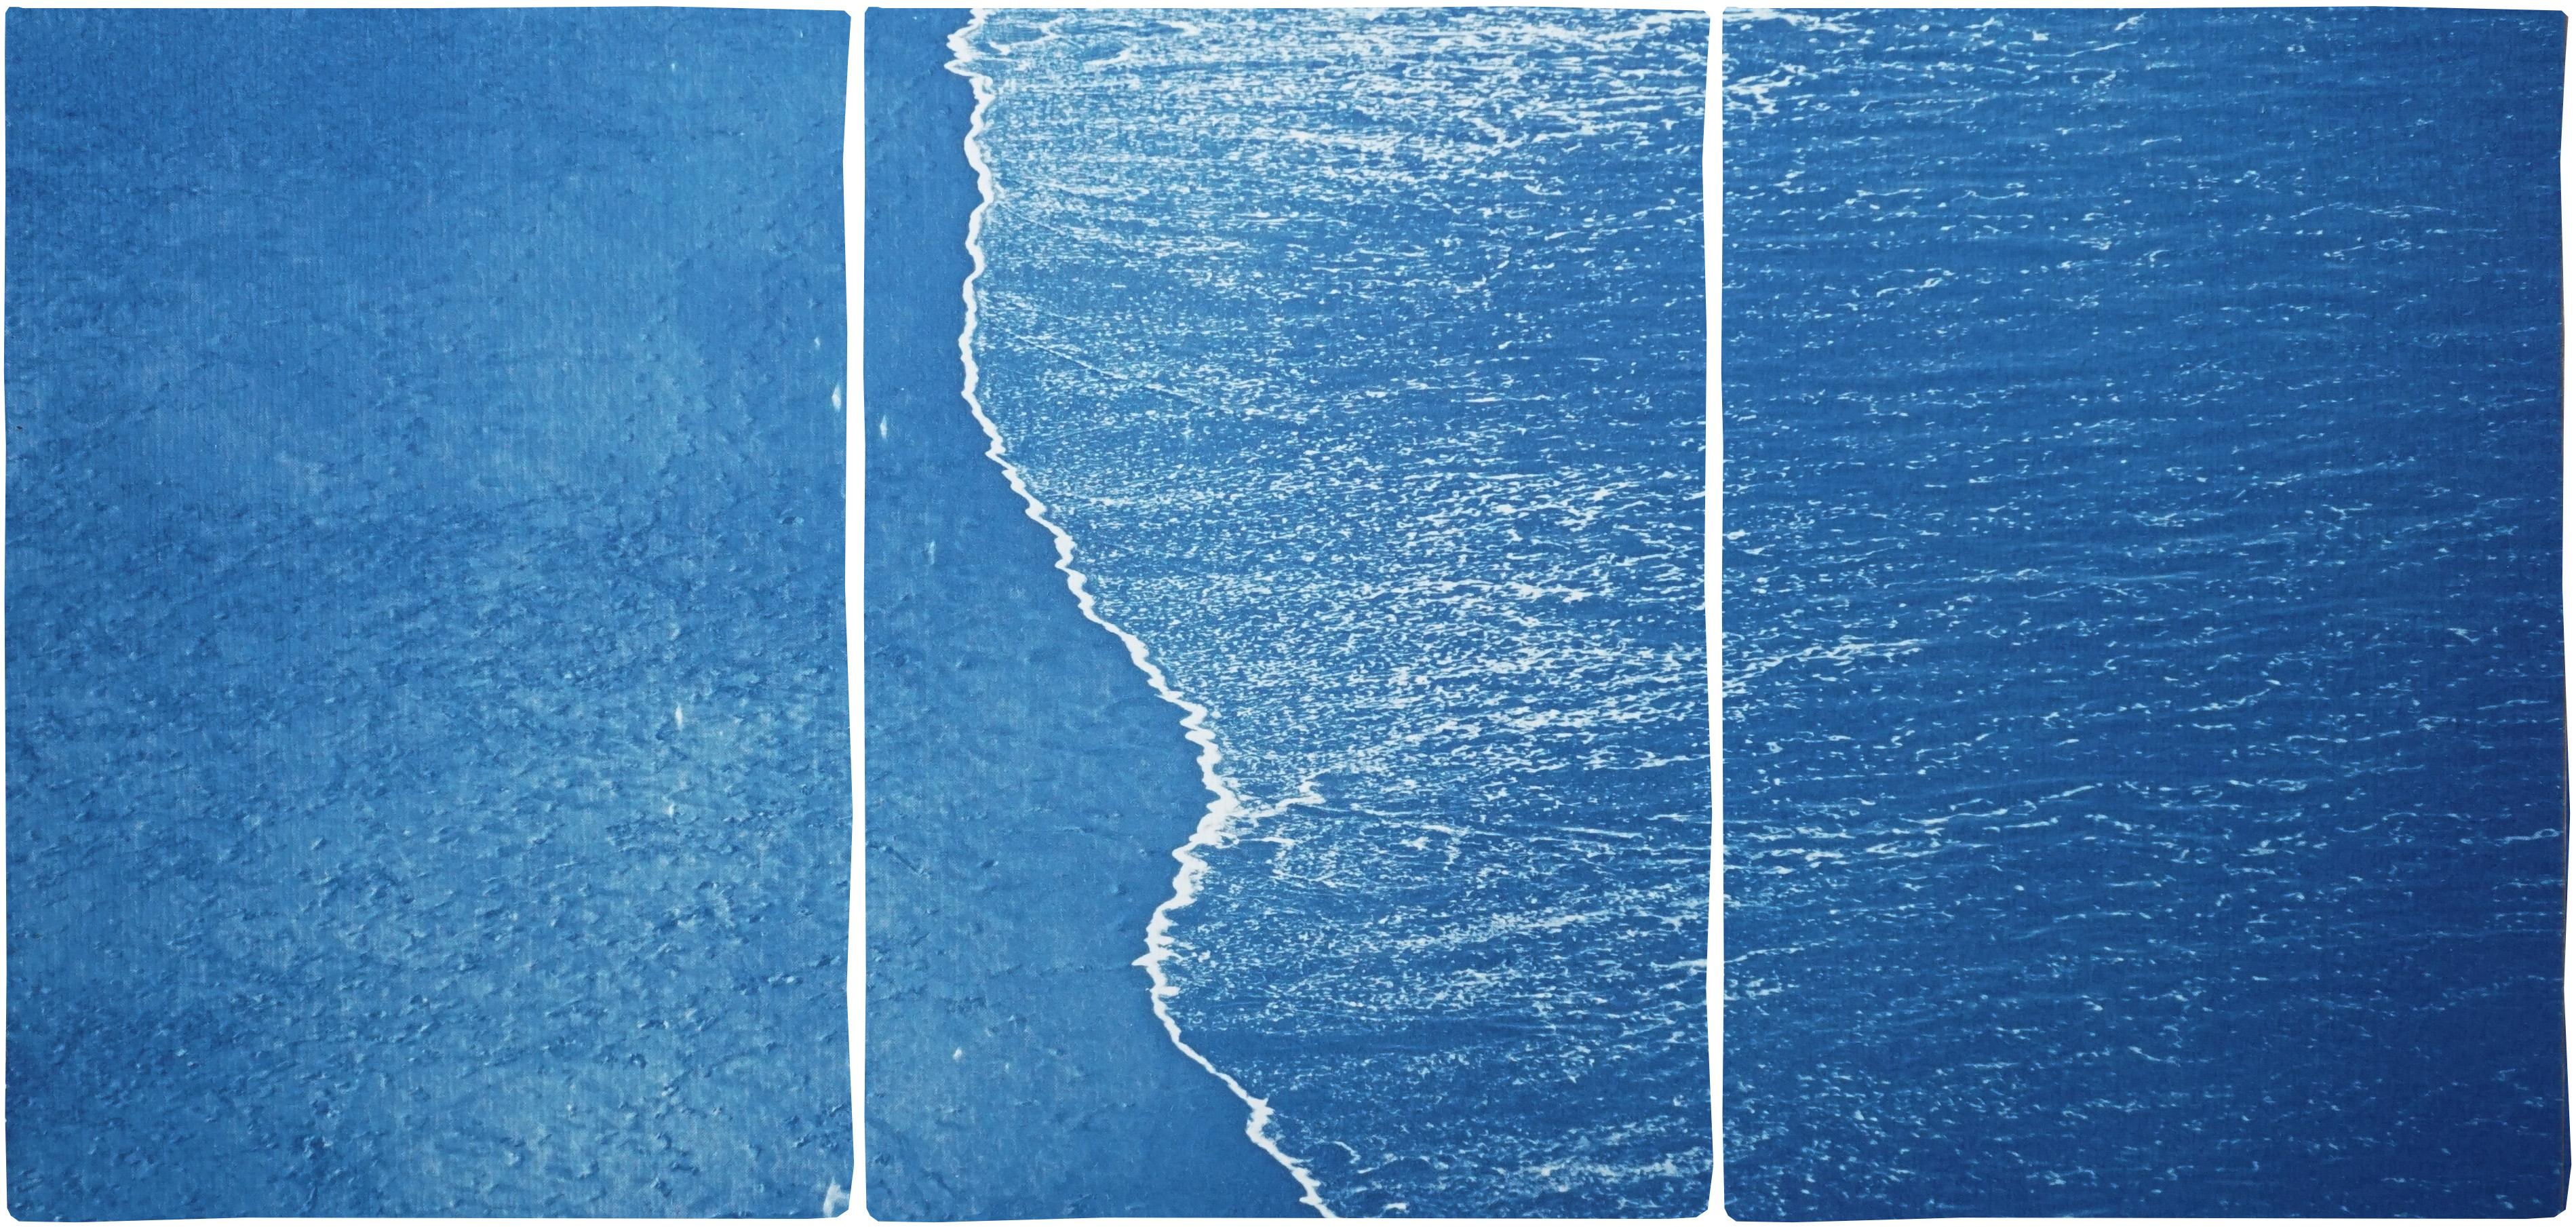 Kind of Cyan Landscape Painting - Blue Subtle Seascape of Calm Costa Rica Shore, Minimal Triptych Cyanotype 